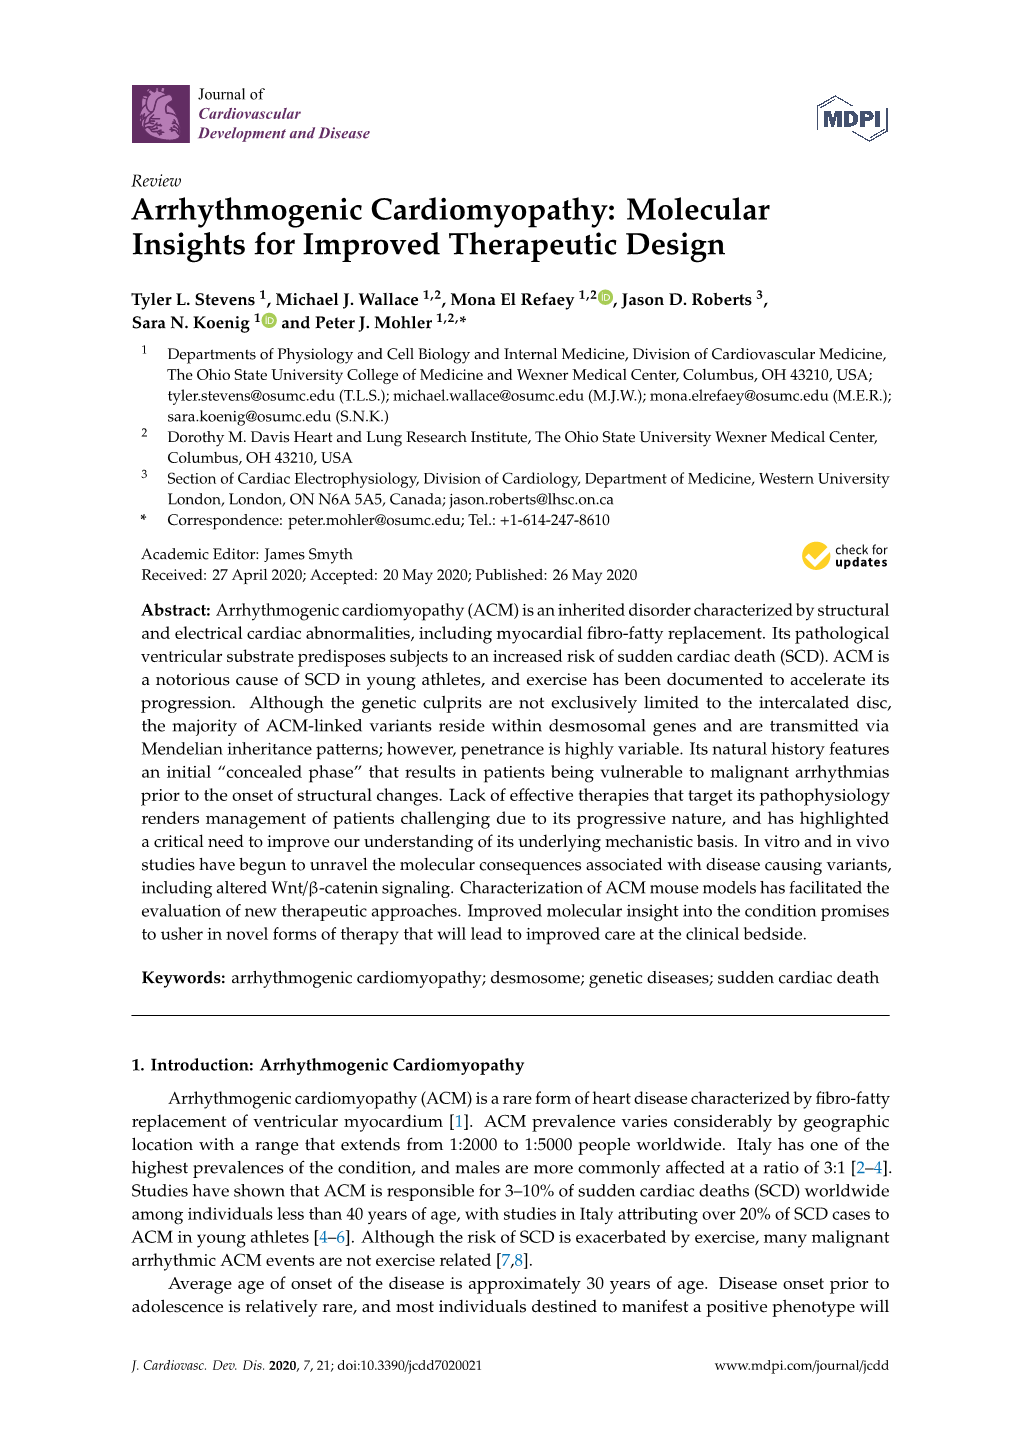 Arrhythmogenic Cardiomyopathy: Molecular Insights for Improved Therapeutic Design